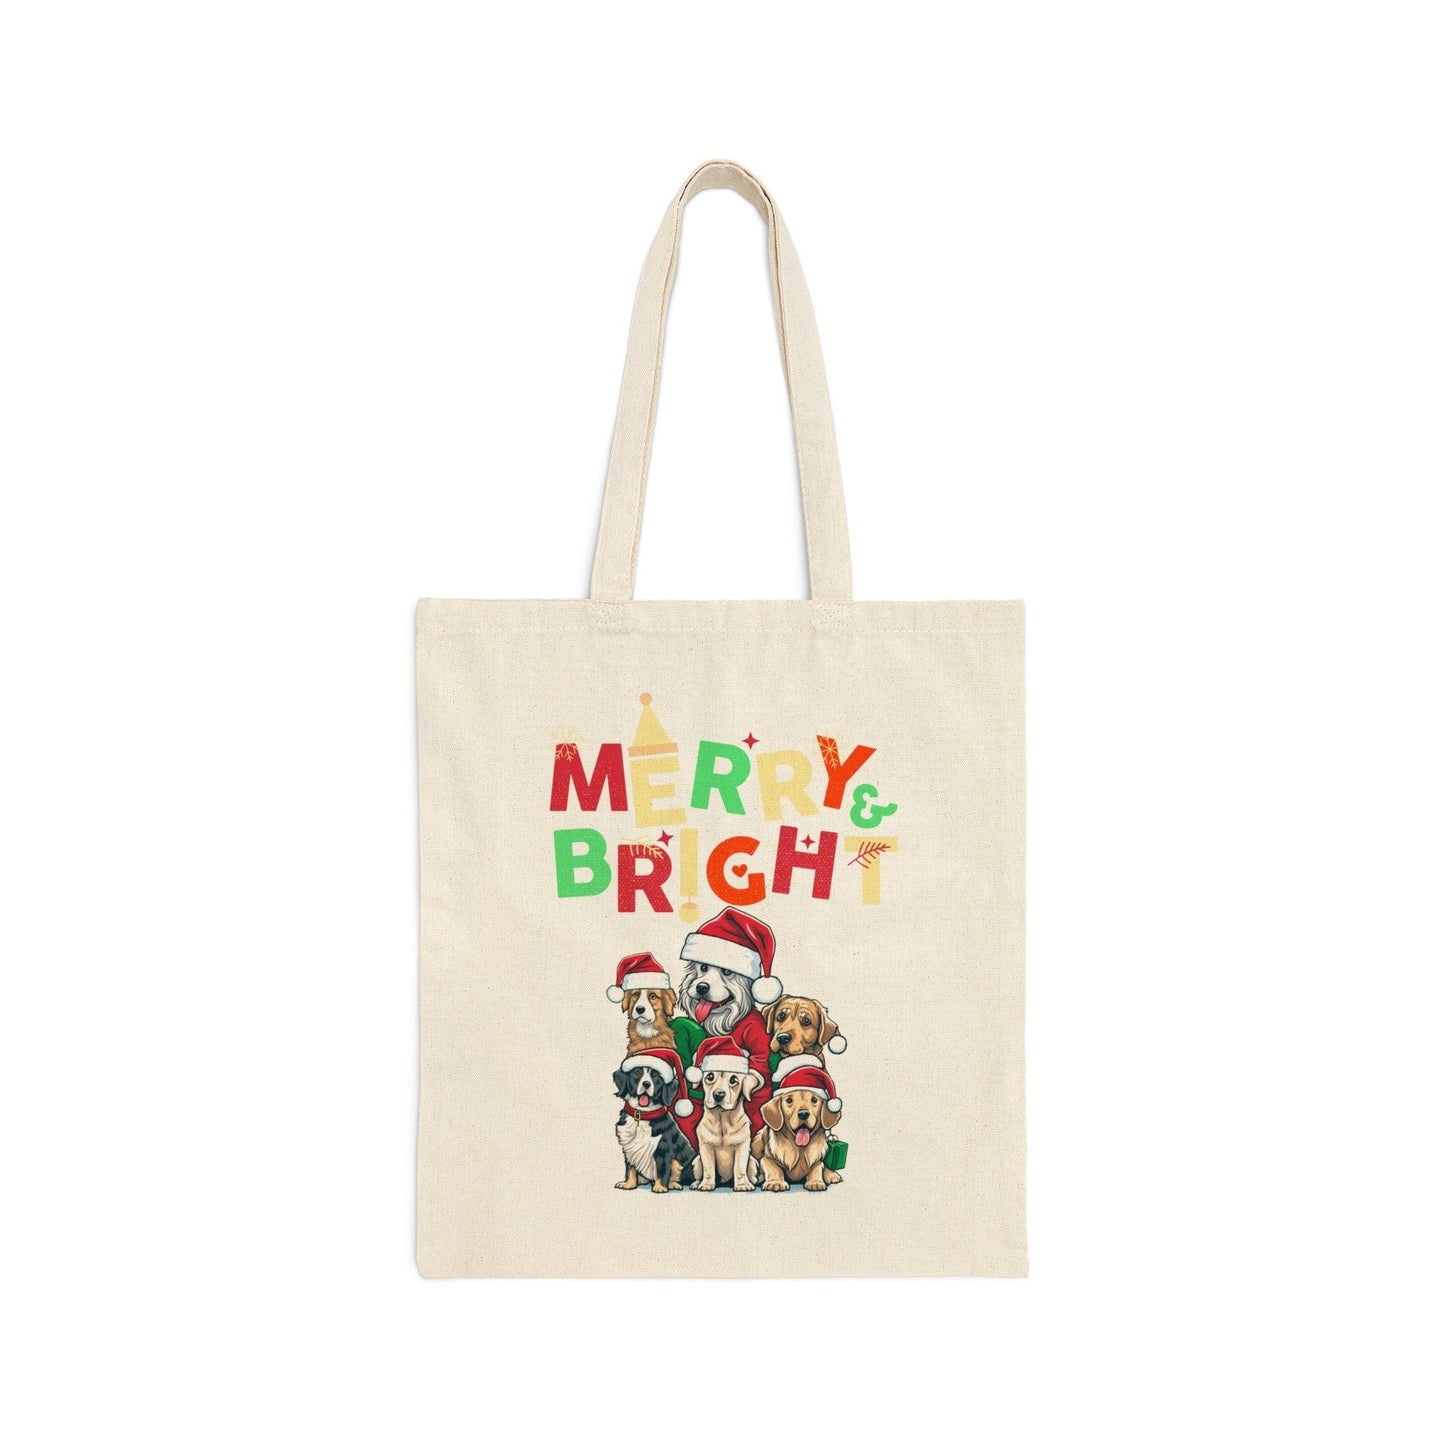 Christmas Tote Bag Christmas Cotton Canvas Tote Bag Shopping Bag Market Bag Merry and Bright Bag - Giftsmojo